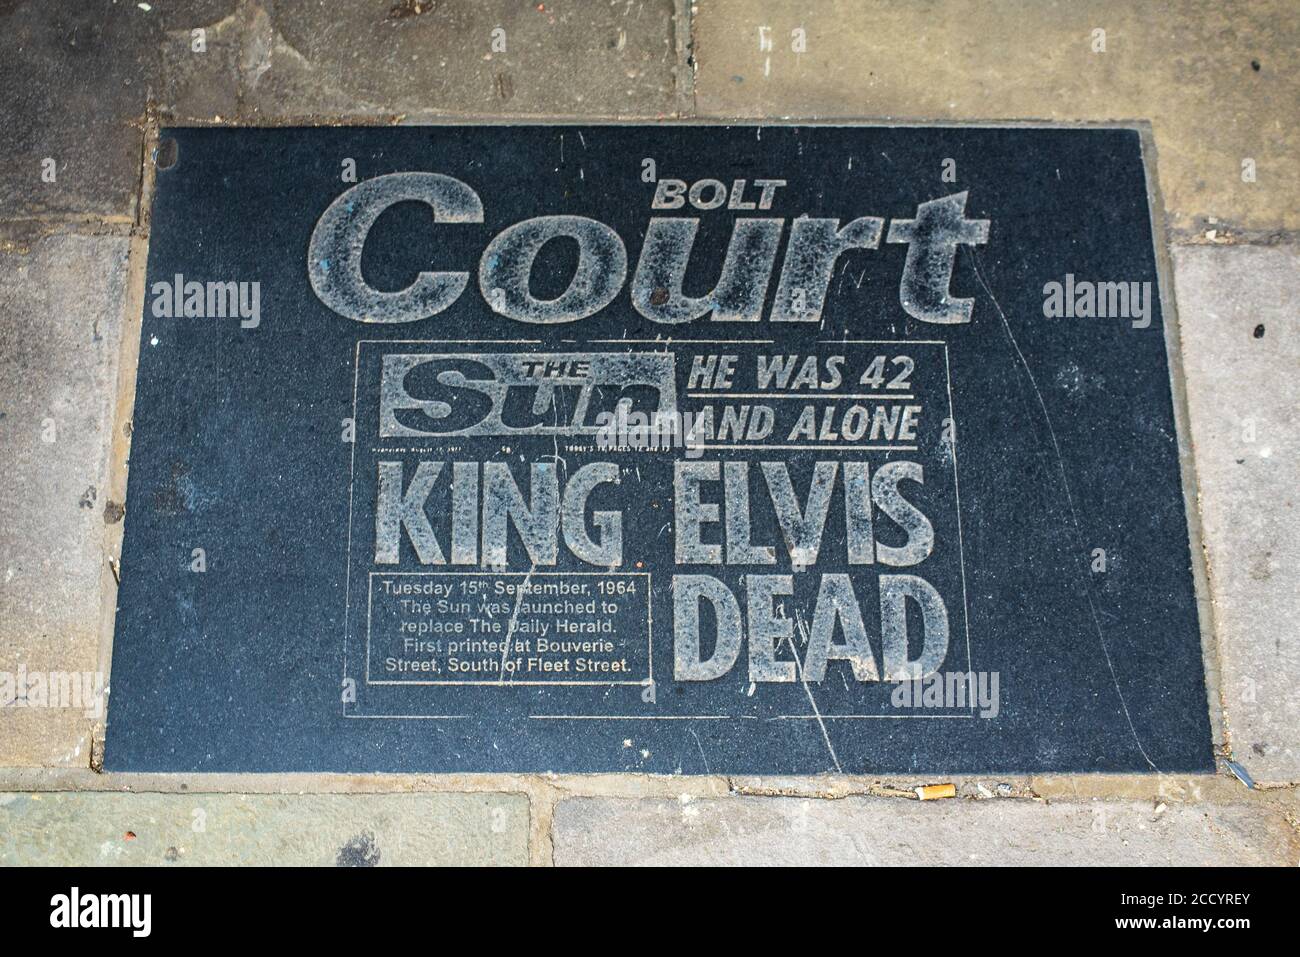 Bolt Court Pavement Plaque - Sun Elvis Dead Headline - plaque commemorating the newspaper heritage of the area around Fleet Street in Central London Stock Photo